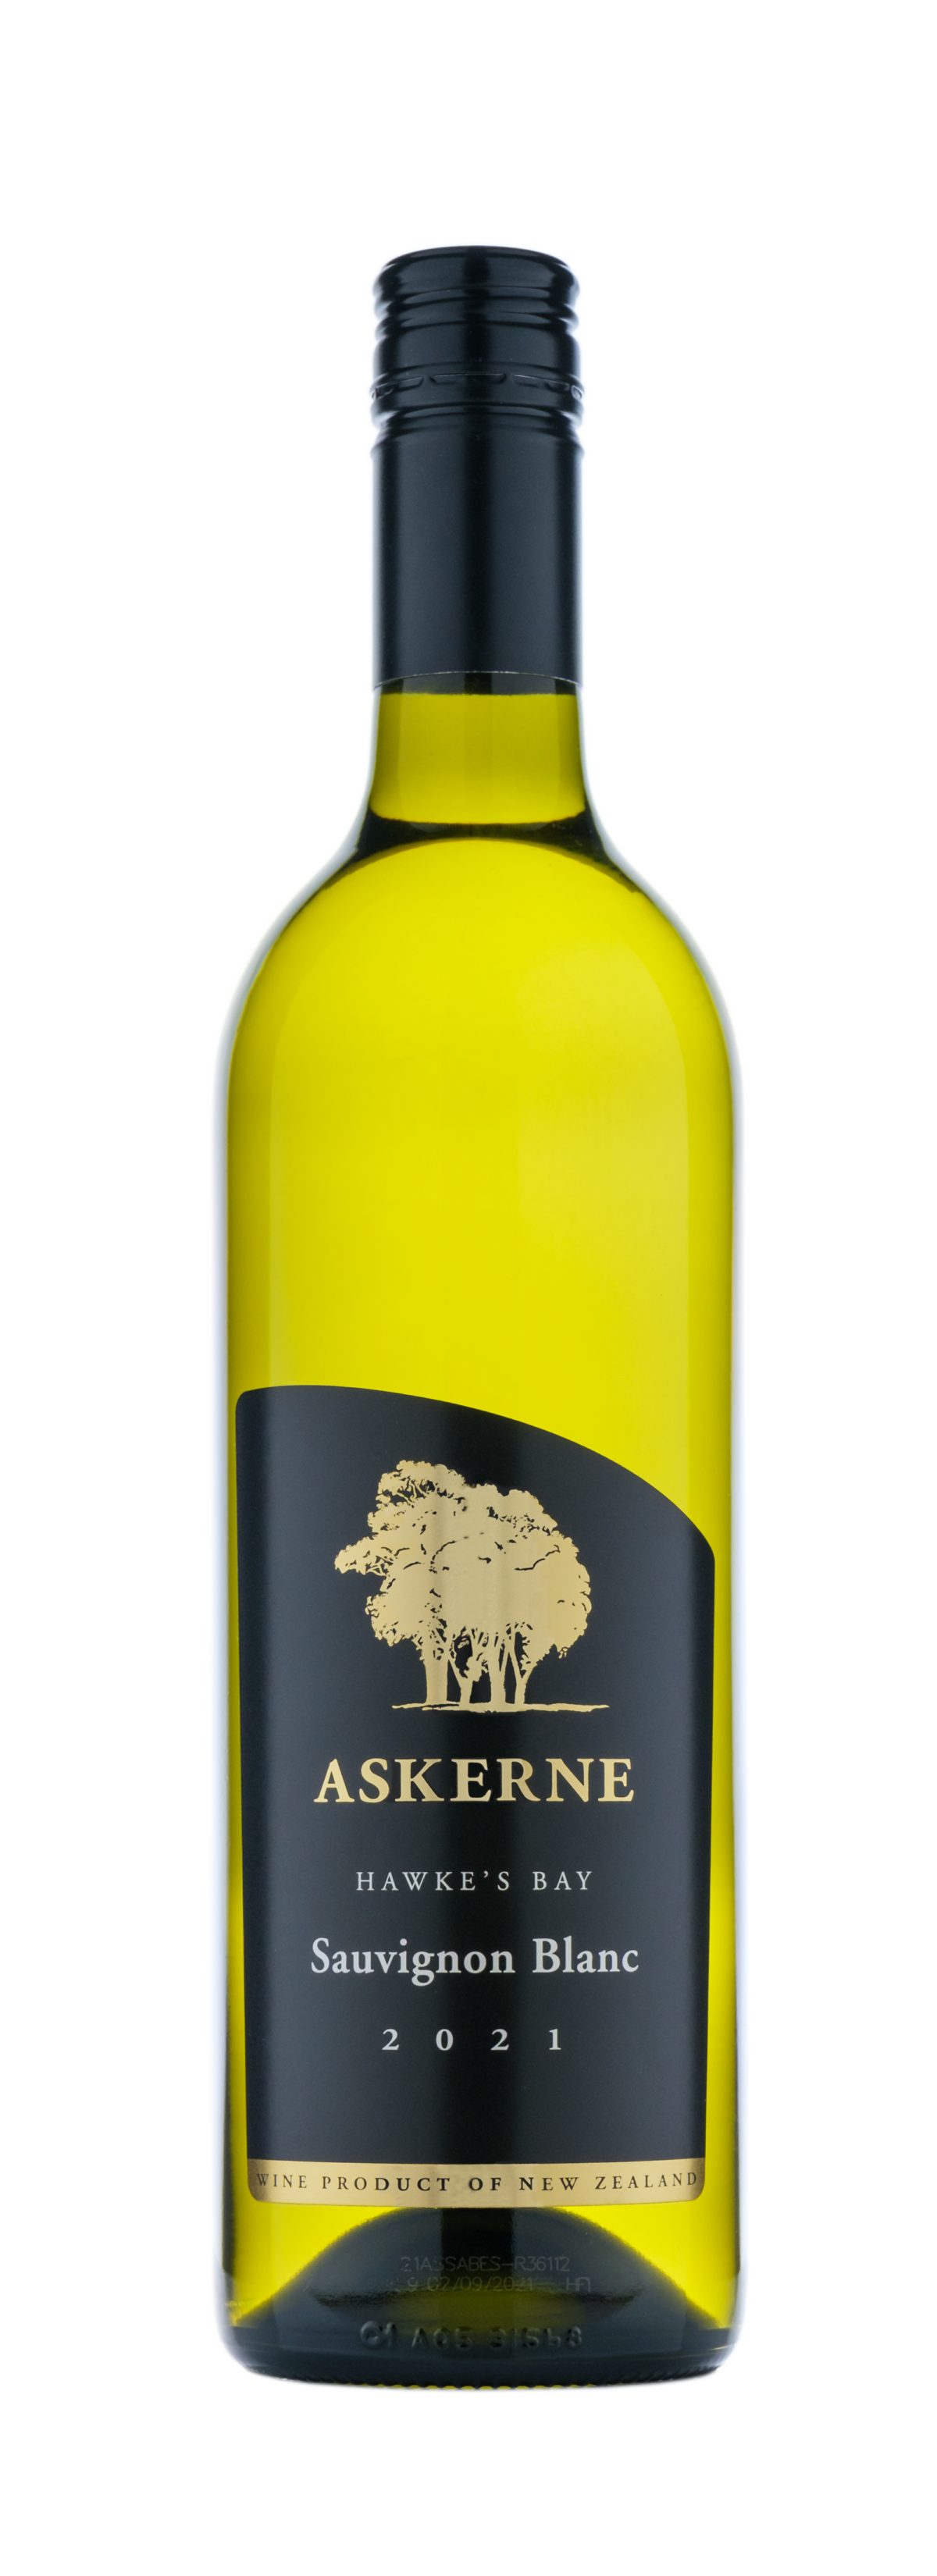 Single Vineyard Wine Award winning Hawke's Bay Sauvignon Blanc Askerne Estate Winery New Zealand